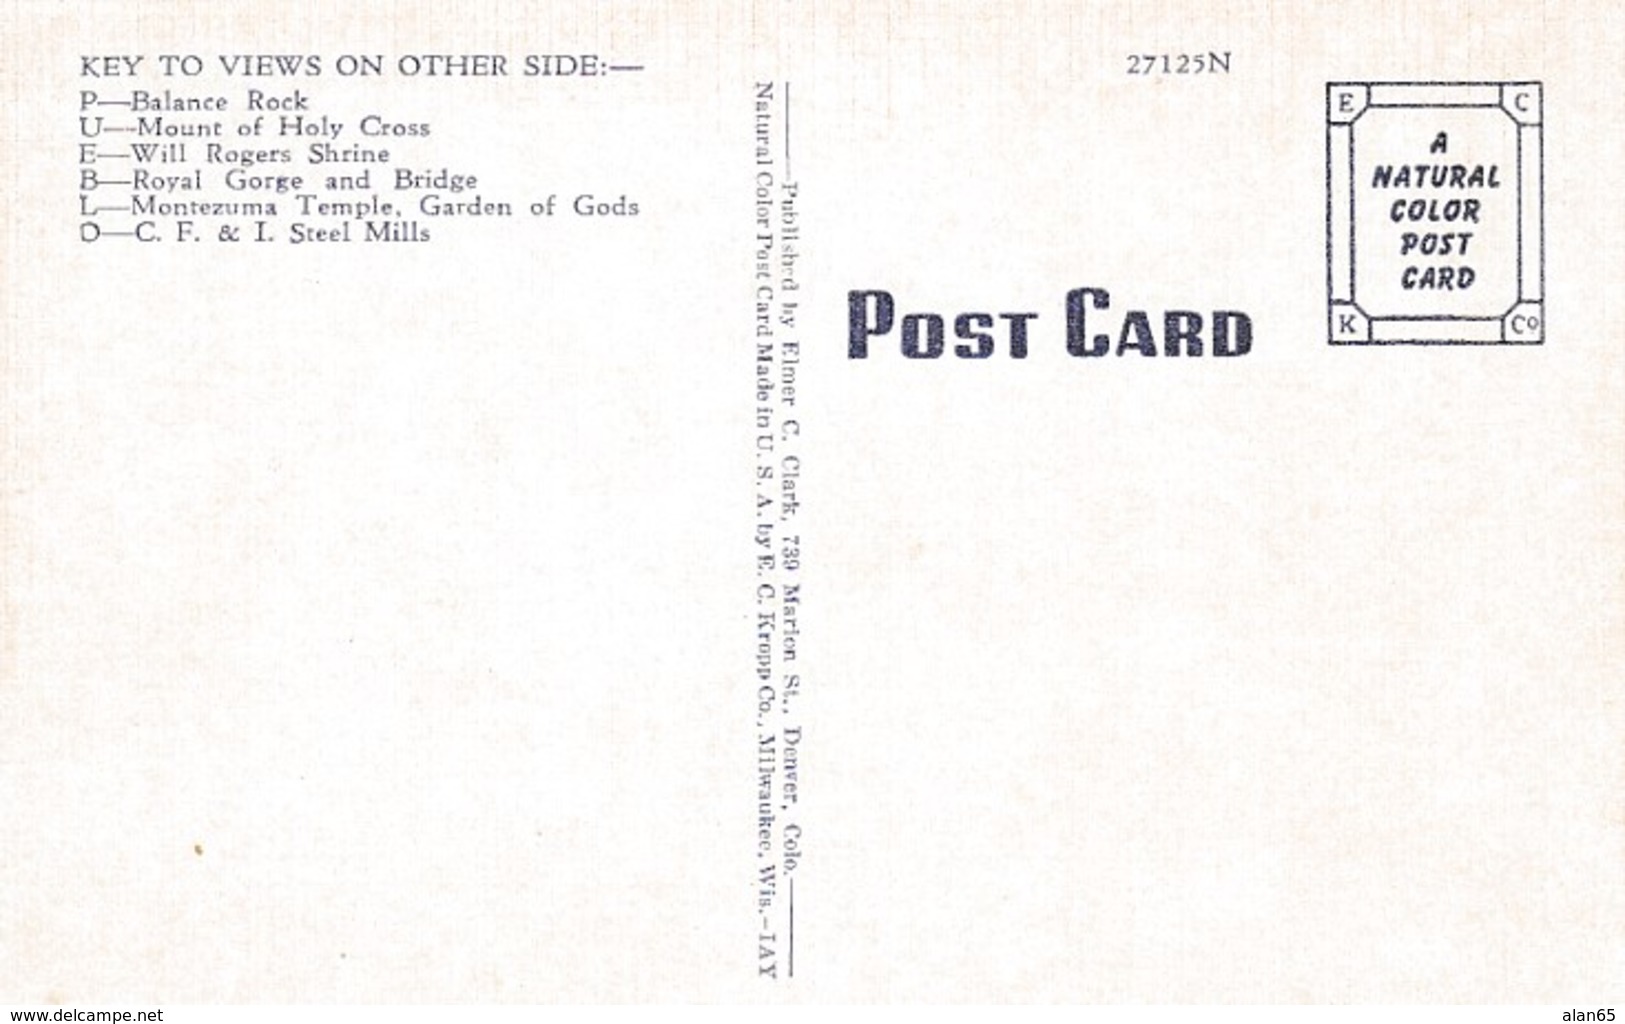 Pueblo Colorado, Greetings From Large Letter, C1940s Linen Postcard - Pueblo